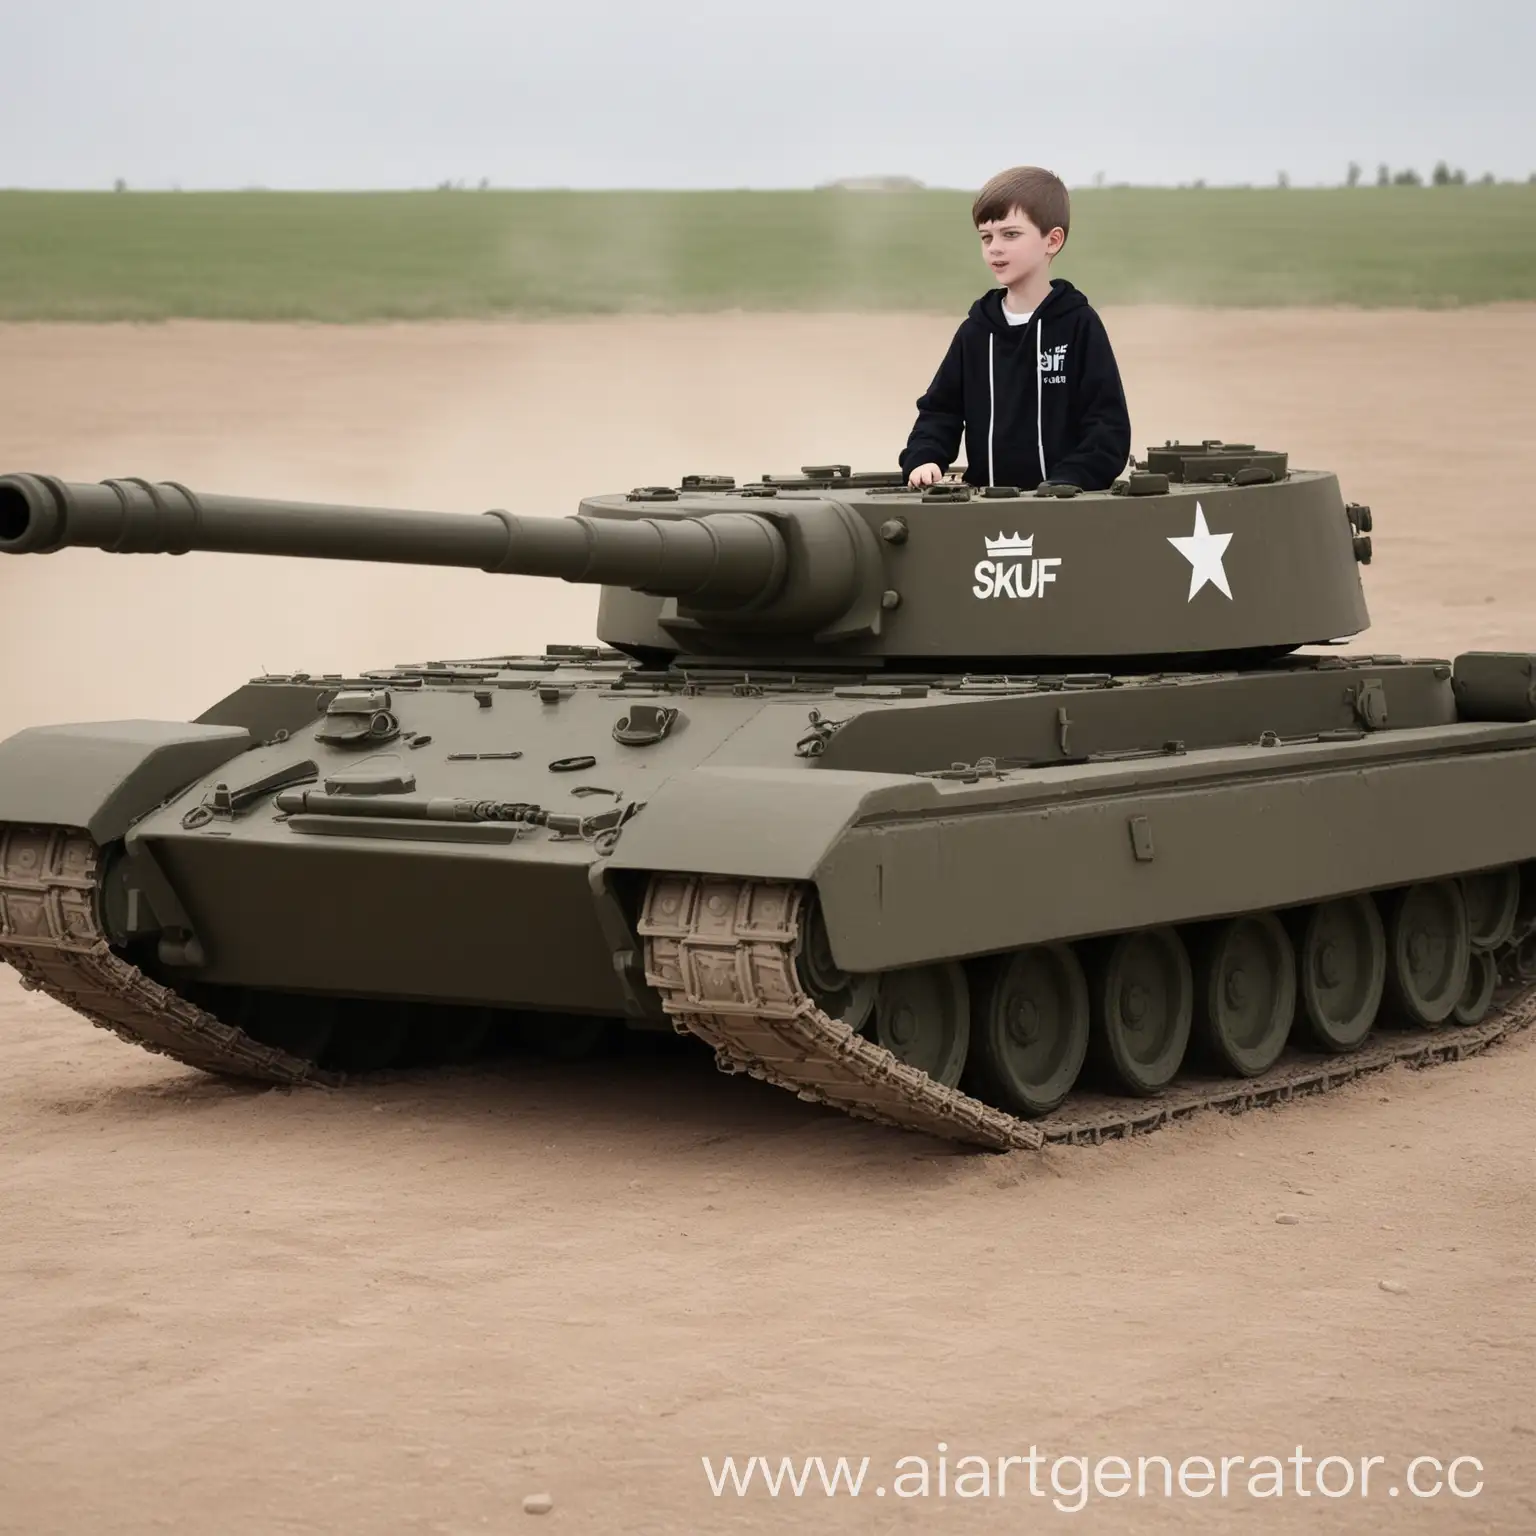 TwelveYearOld-Boy-Playing-with-Toy-Tanks